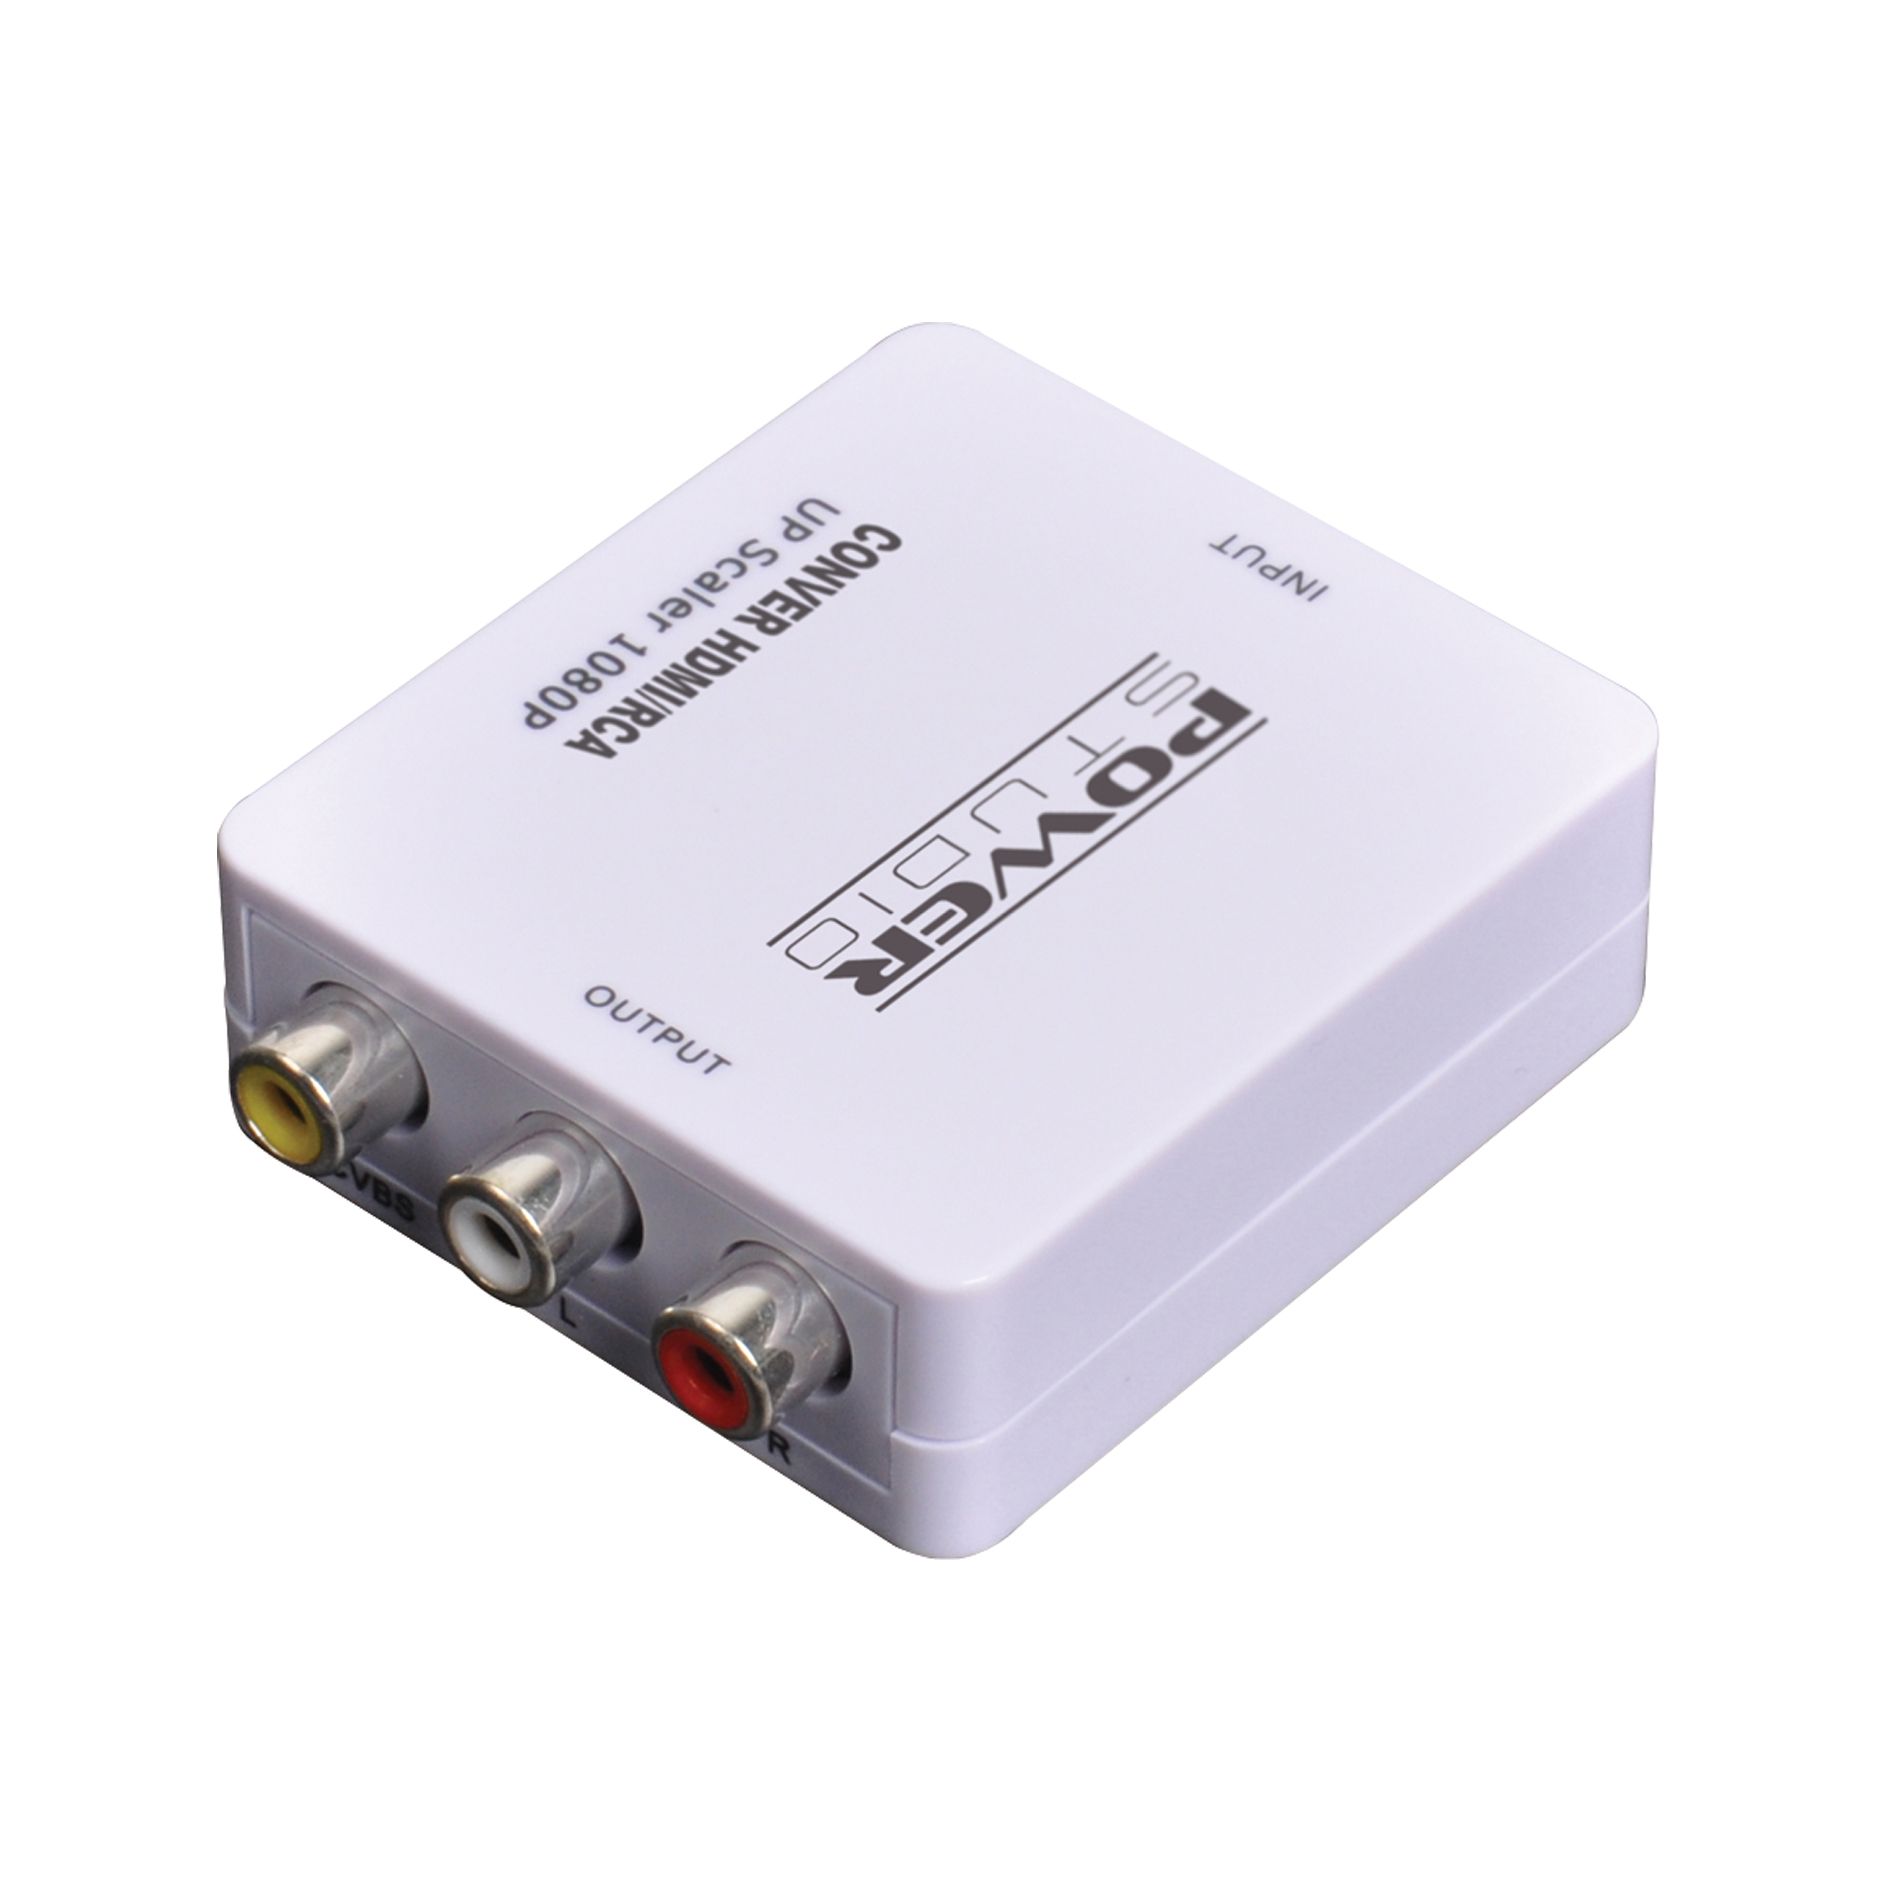 Power Studio Conver Hdmi Rca - Connector adapter - Variation 1